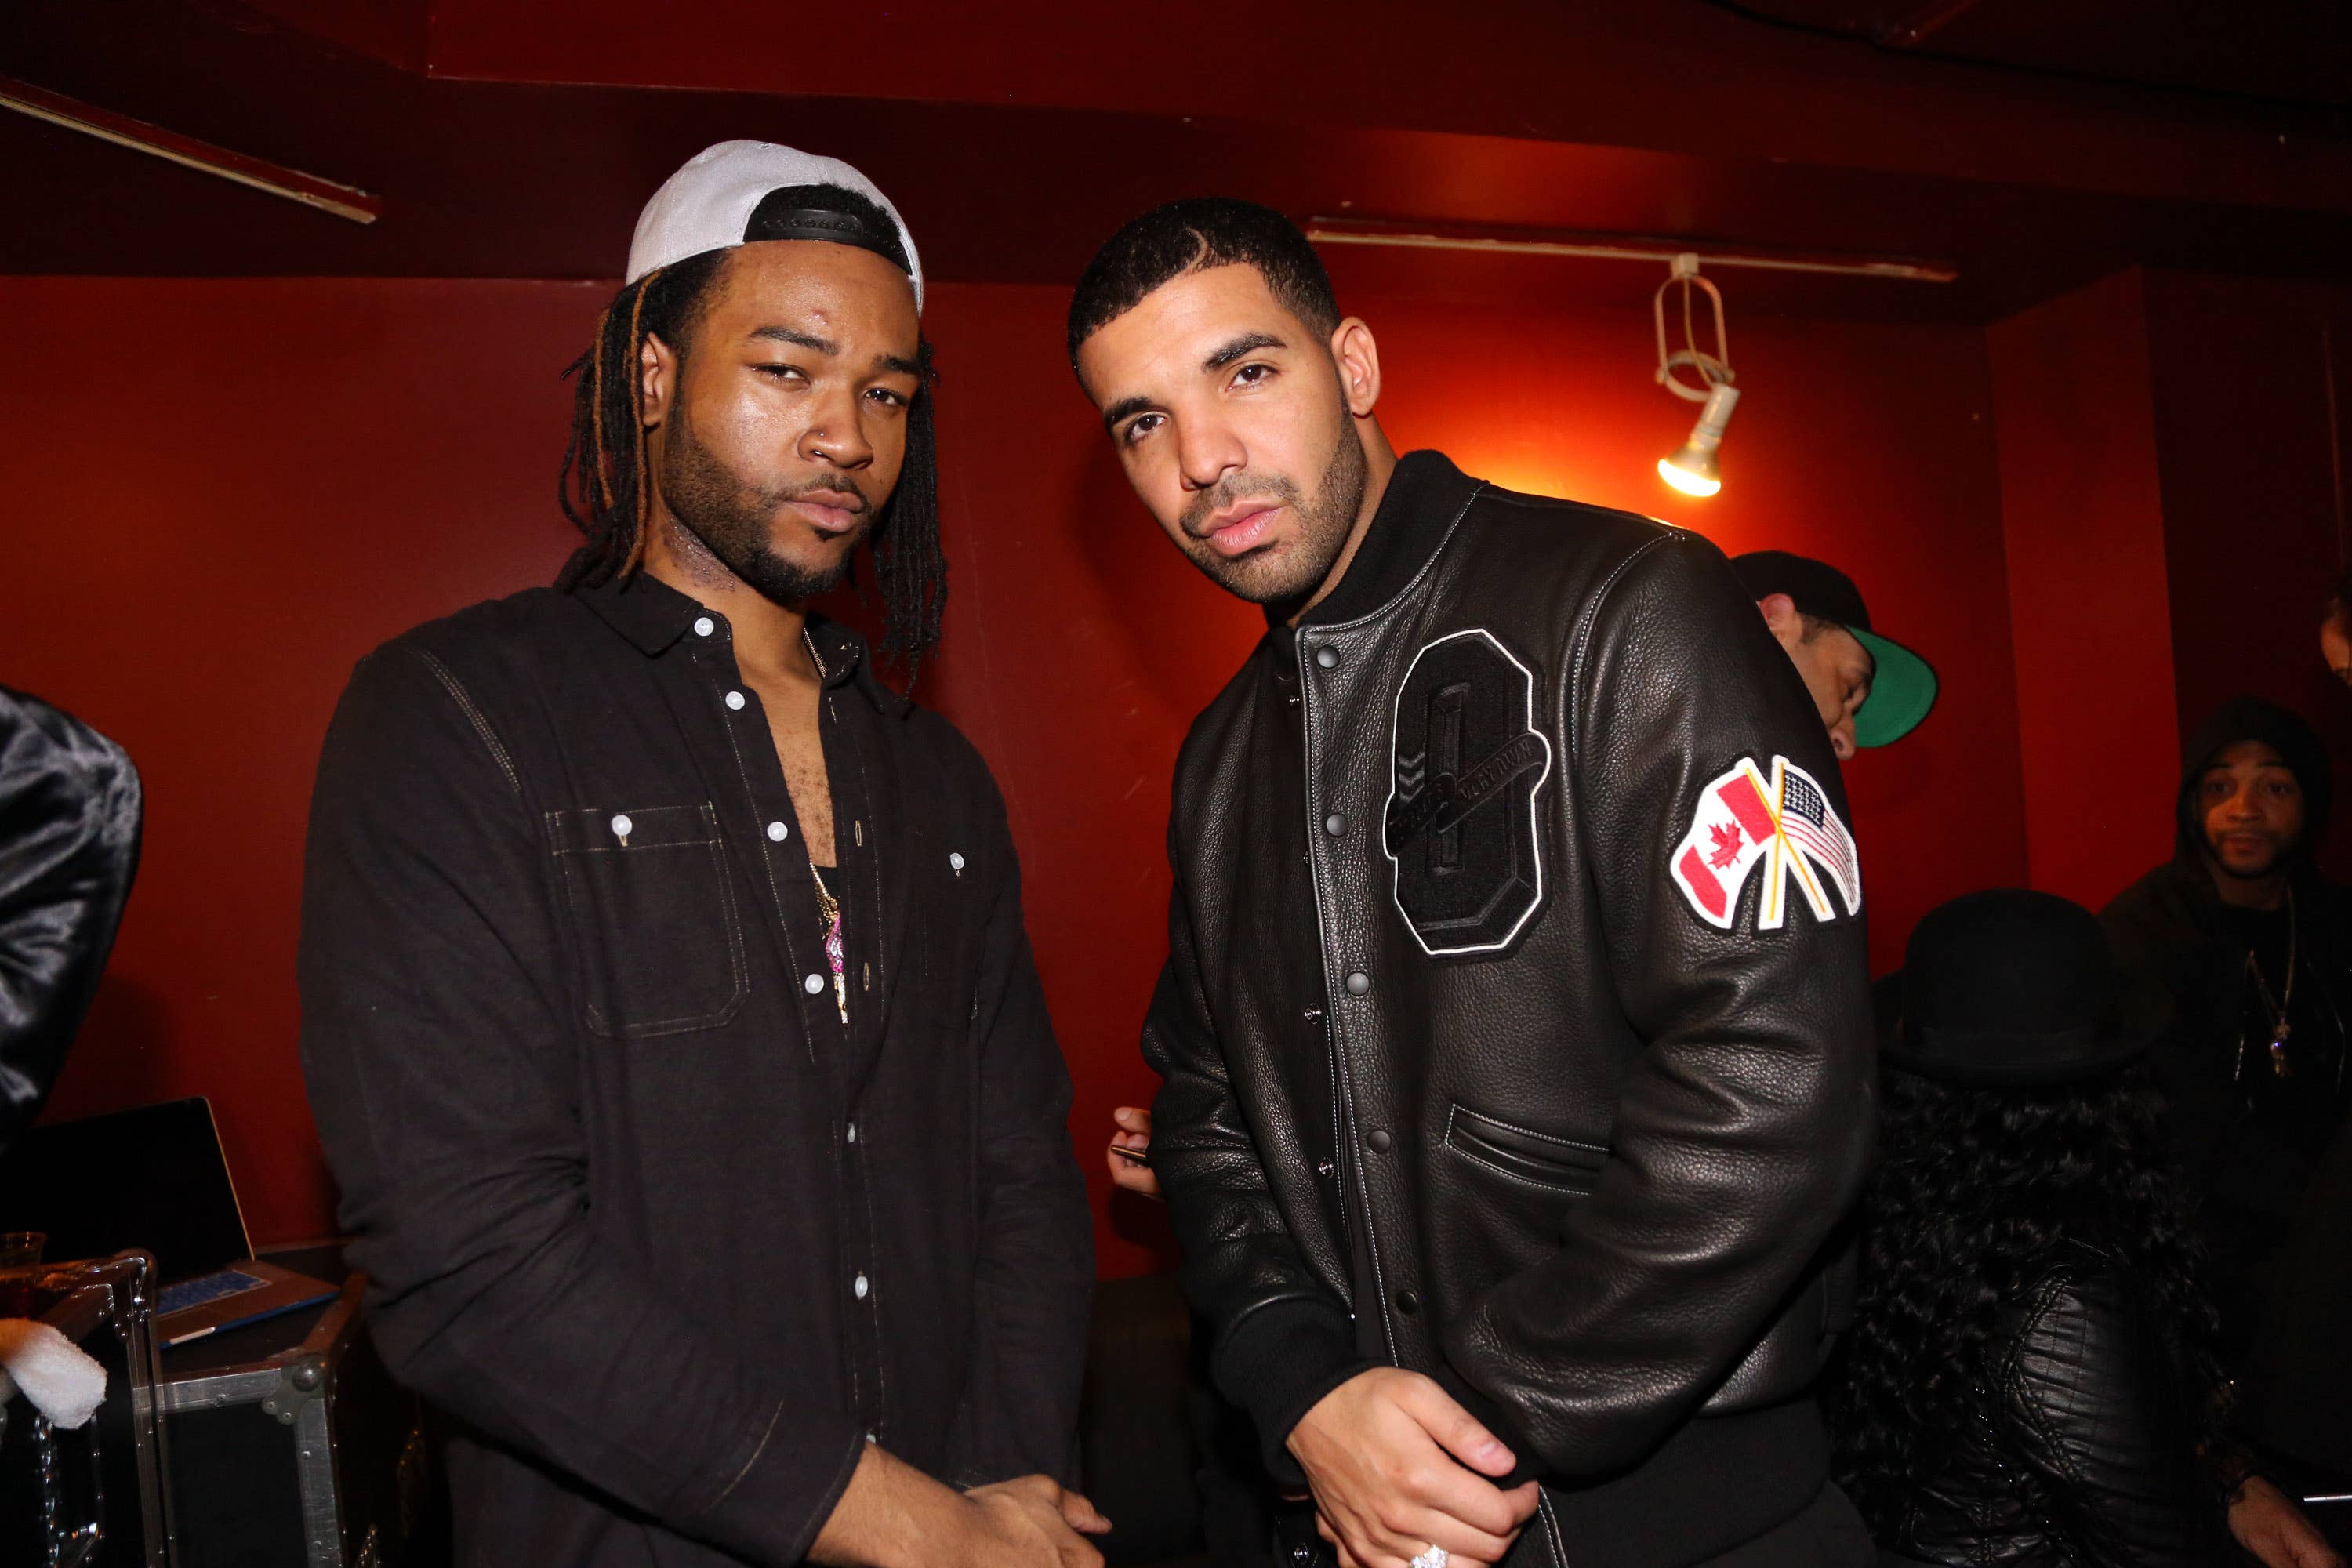 Drake and Partynextdoor posing